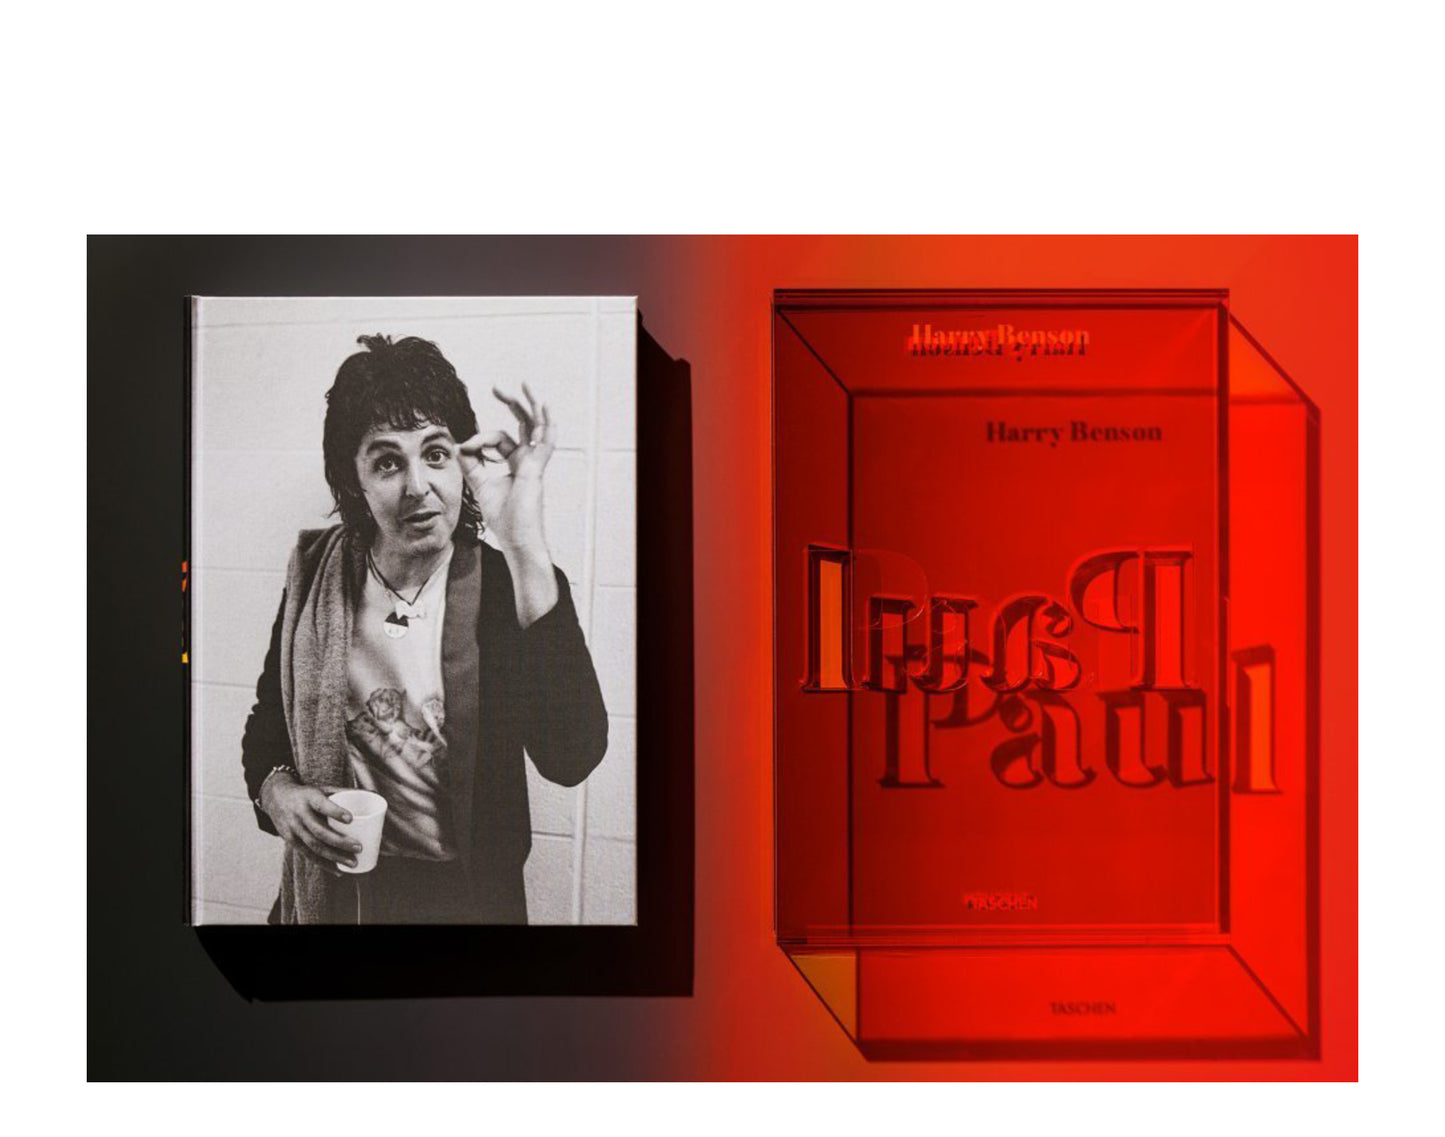 Taschen Books - Harry Benson. Paul - XL - Hardcover Book - Edition of 600